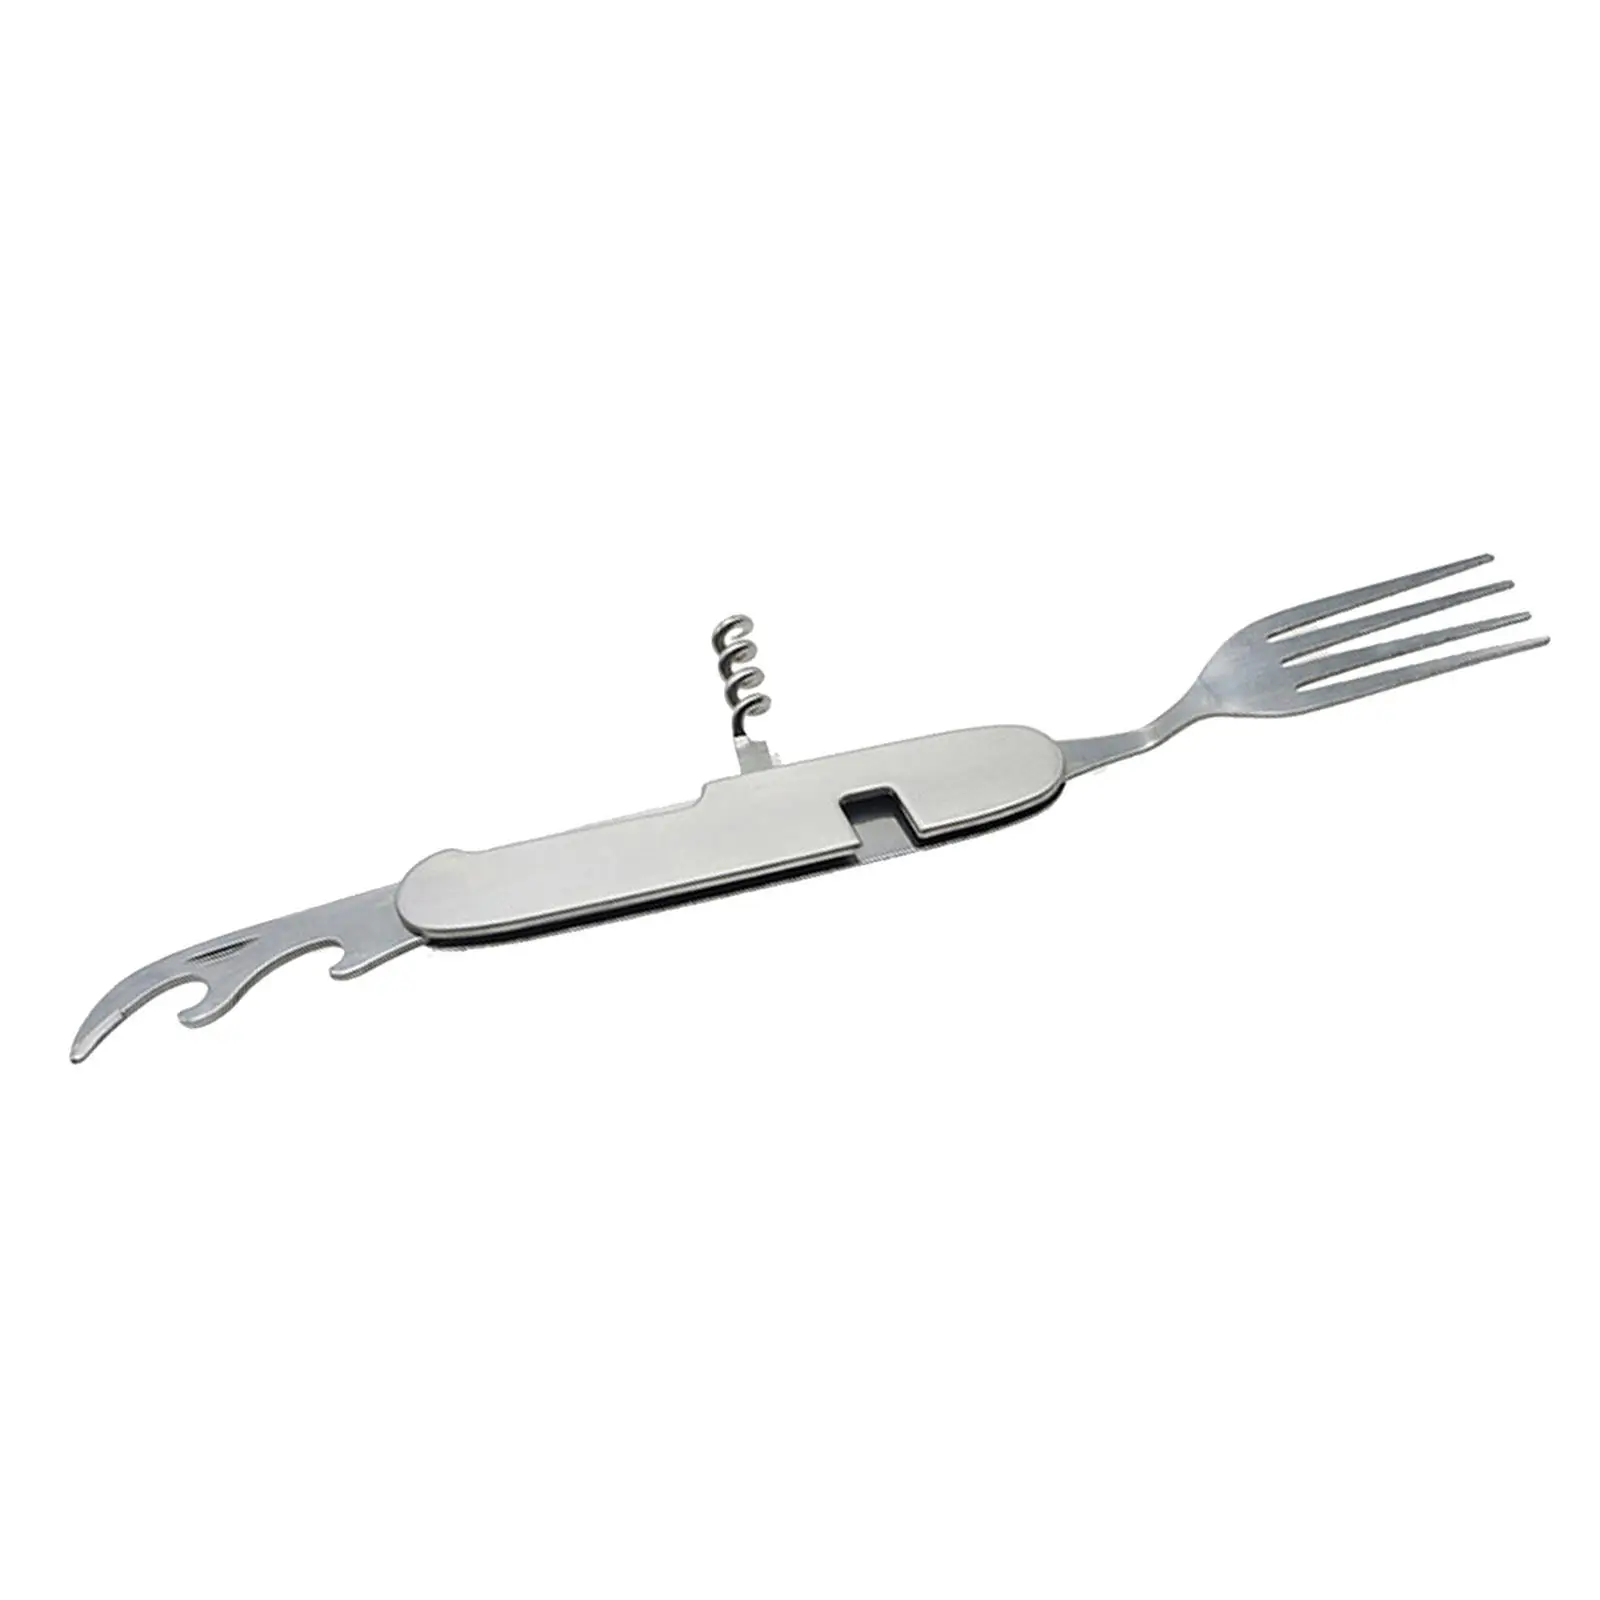 5 in 1 Camping Utensils Foldable Flatware Cookware Dinnerware Camping Cutlery